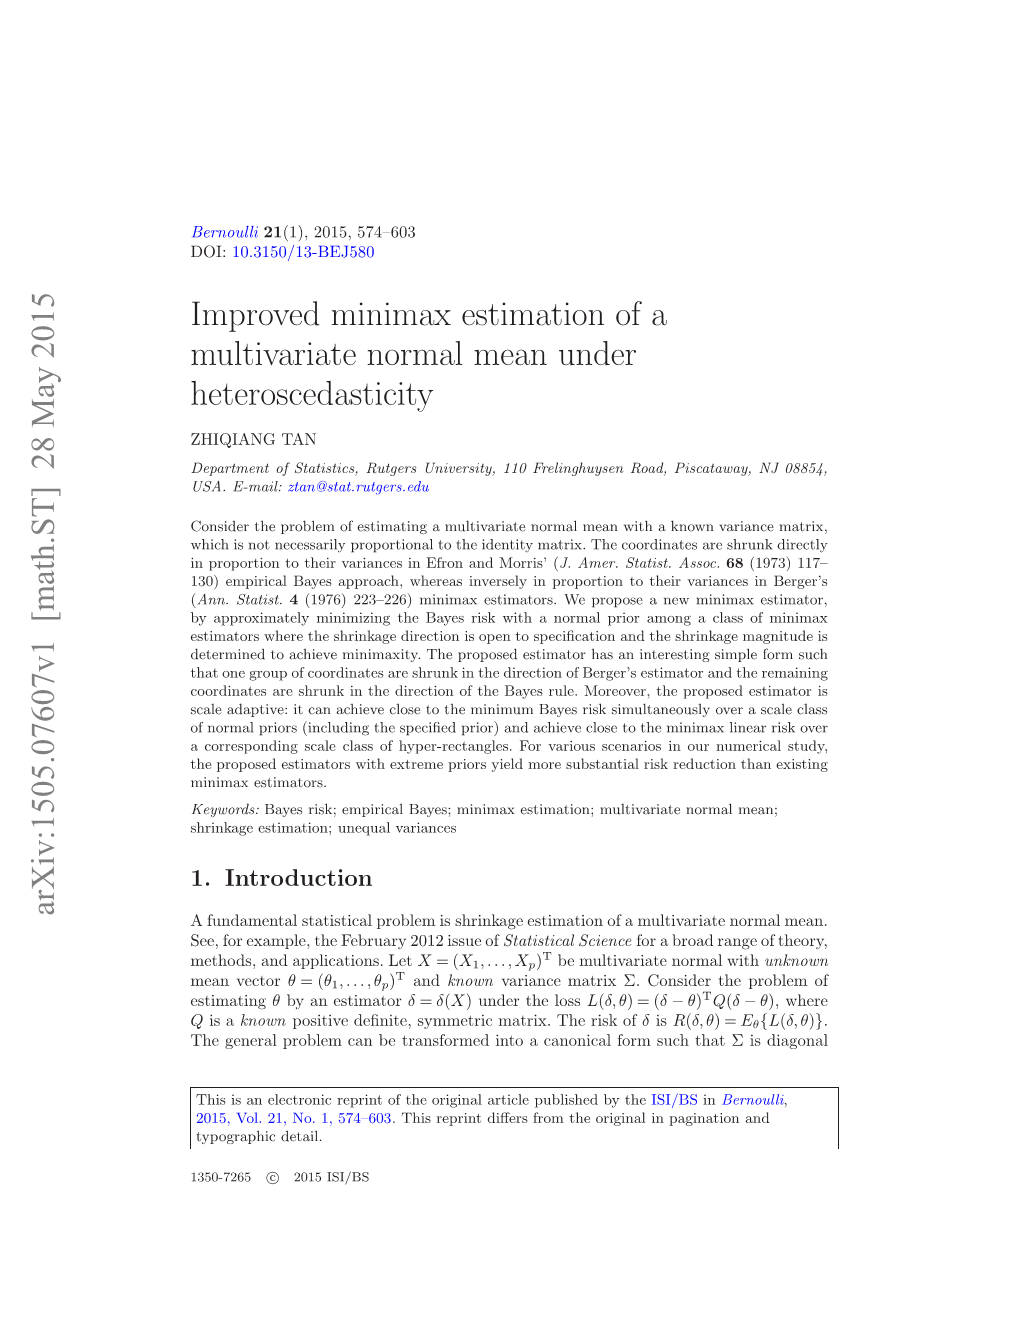 Improved Minimax Estimation of a Multivariate Normal Mean Under Heteroscedasticity” (DOI: 10.3150/13-BEJ580SUPP; .Pdf)